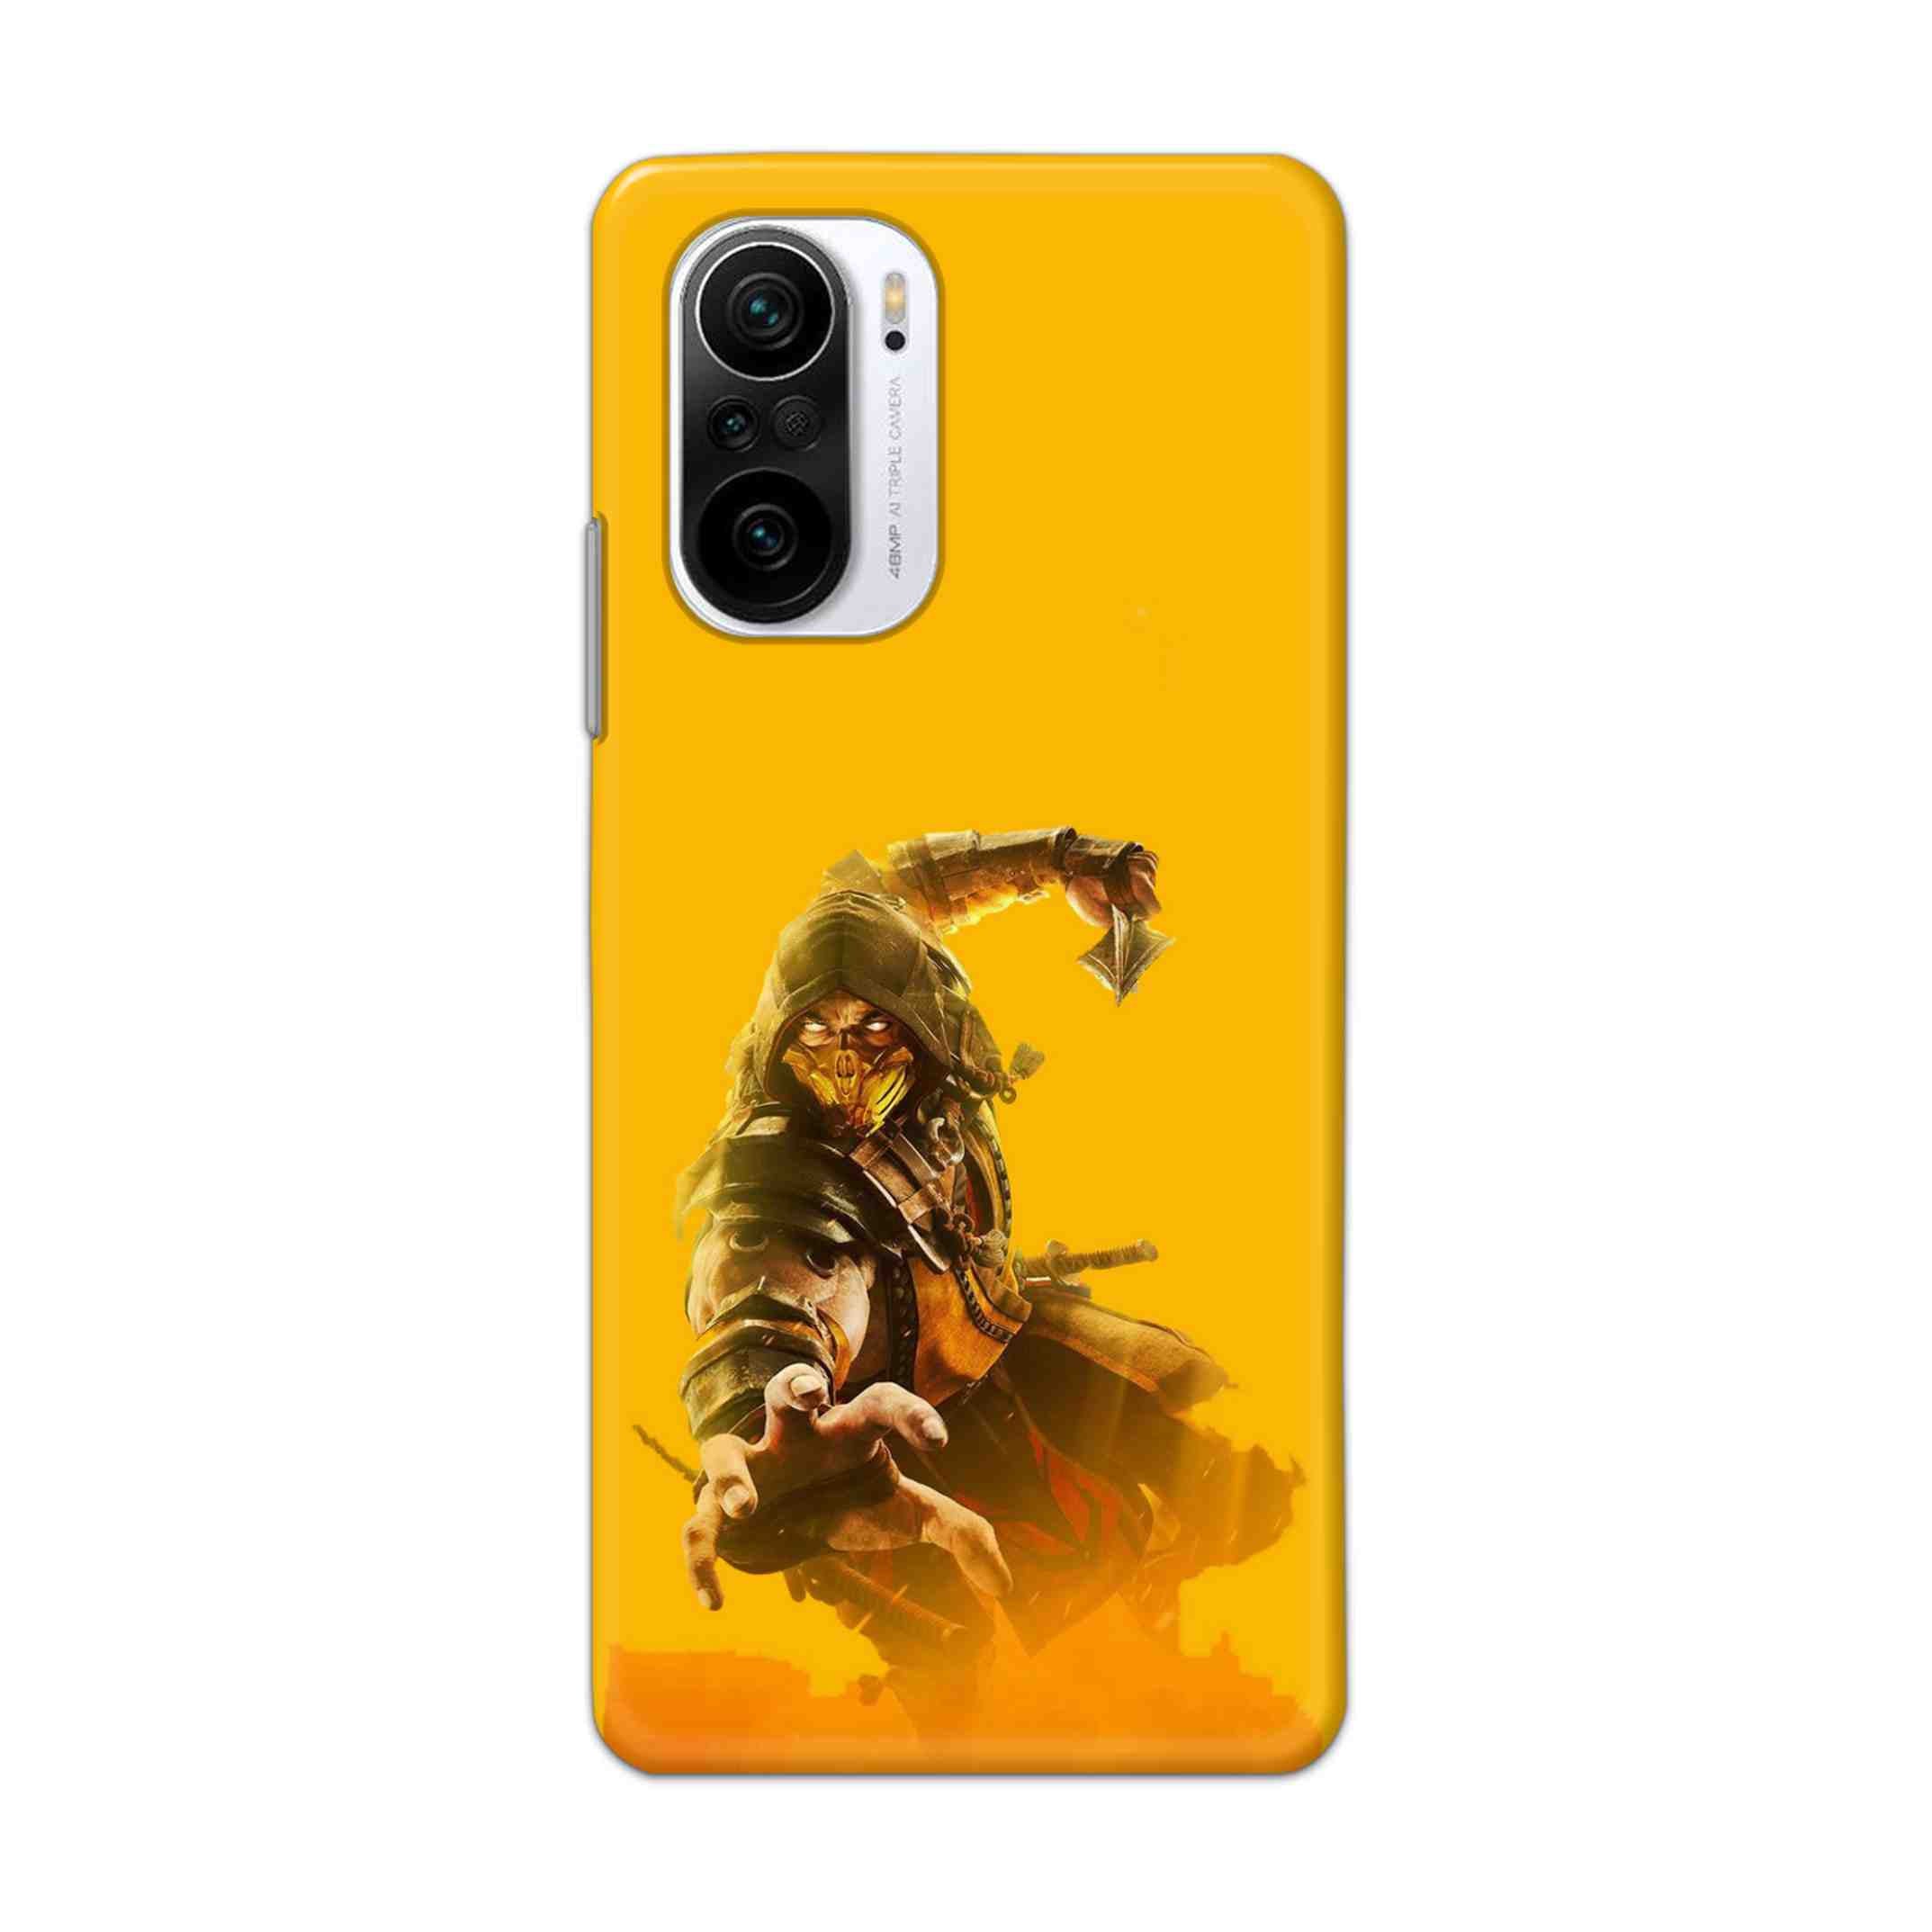 Buy Mortal Kombat Hard Back Mobile Phone Case Cover For Mi 11X Online